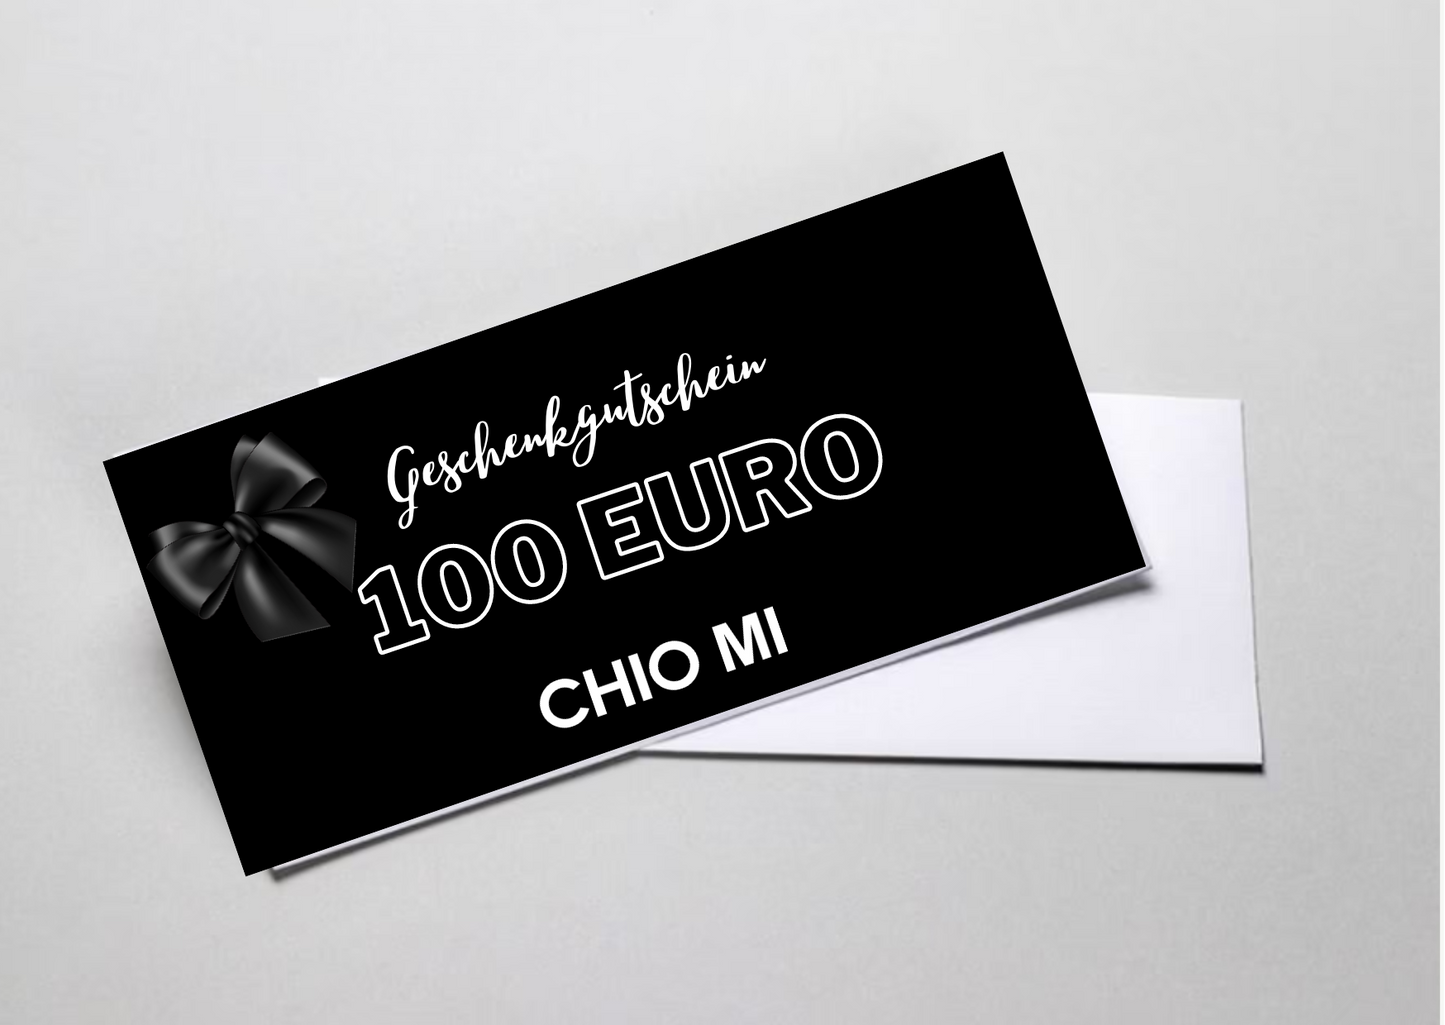 CHIO MI Gift Card